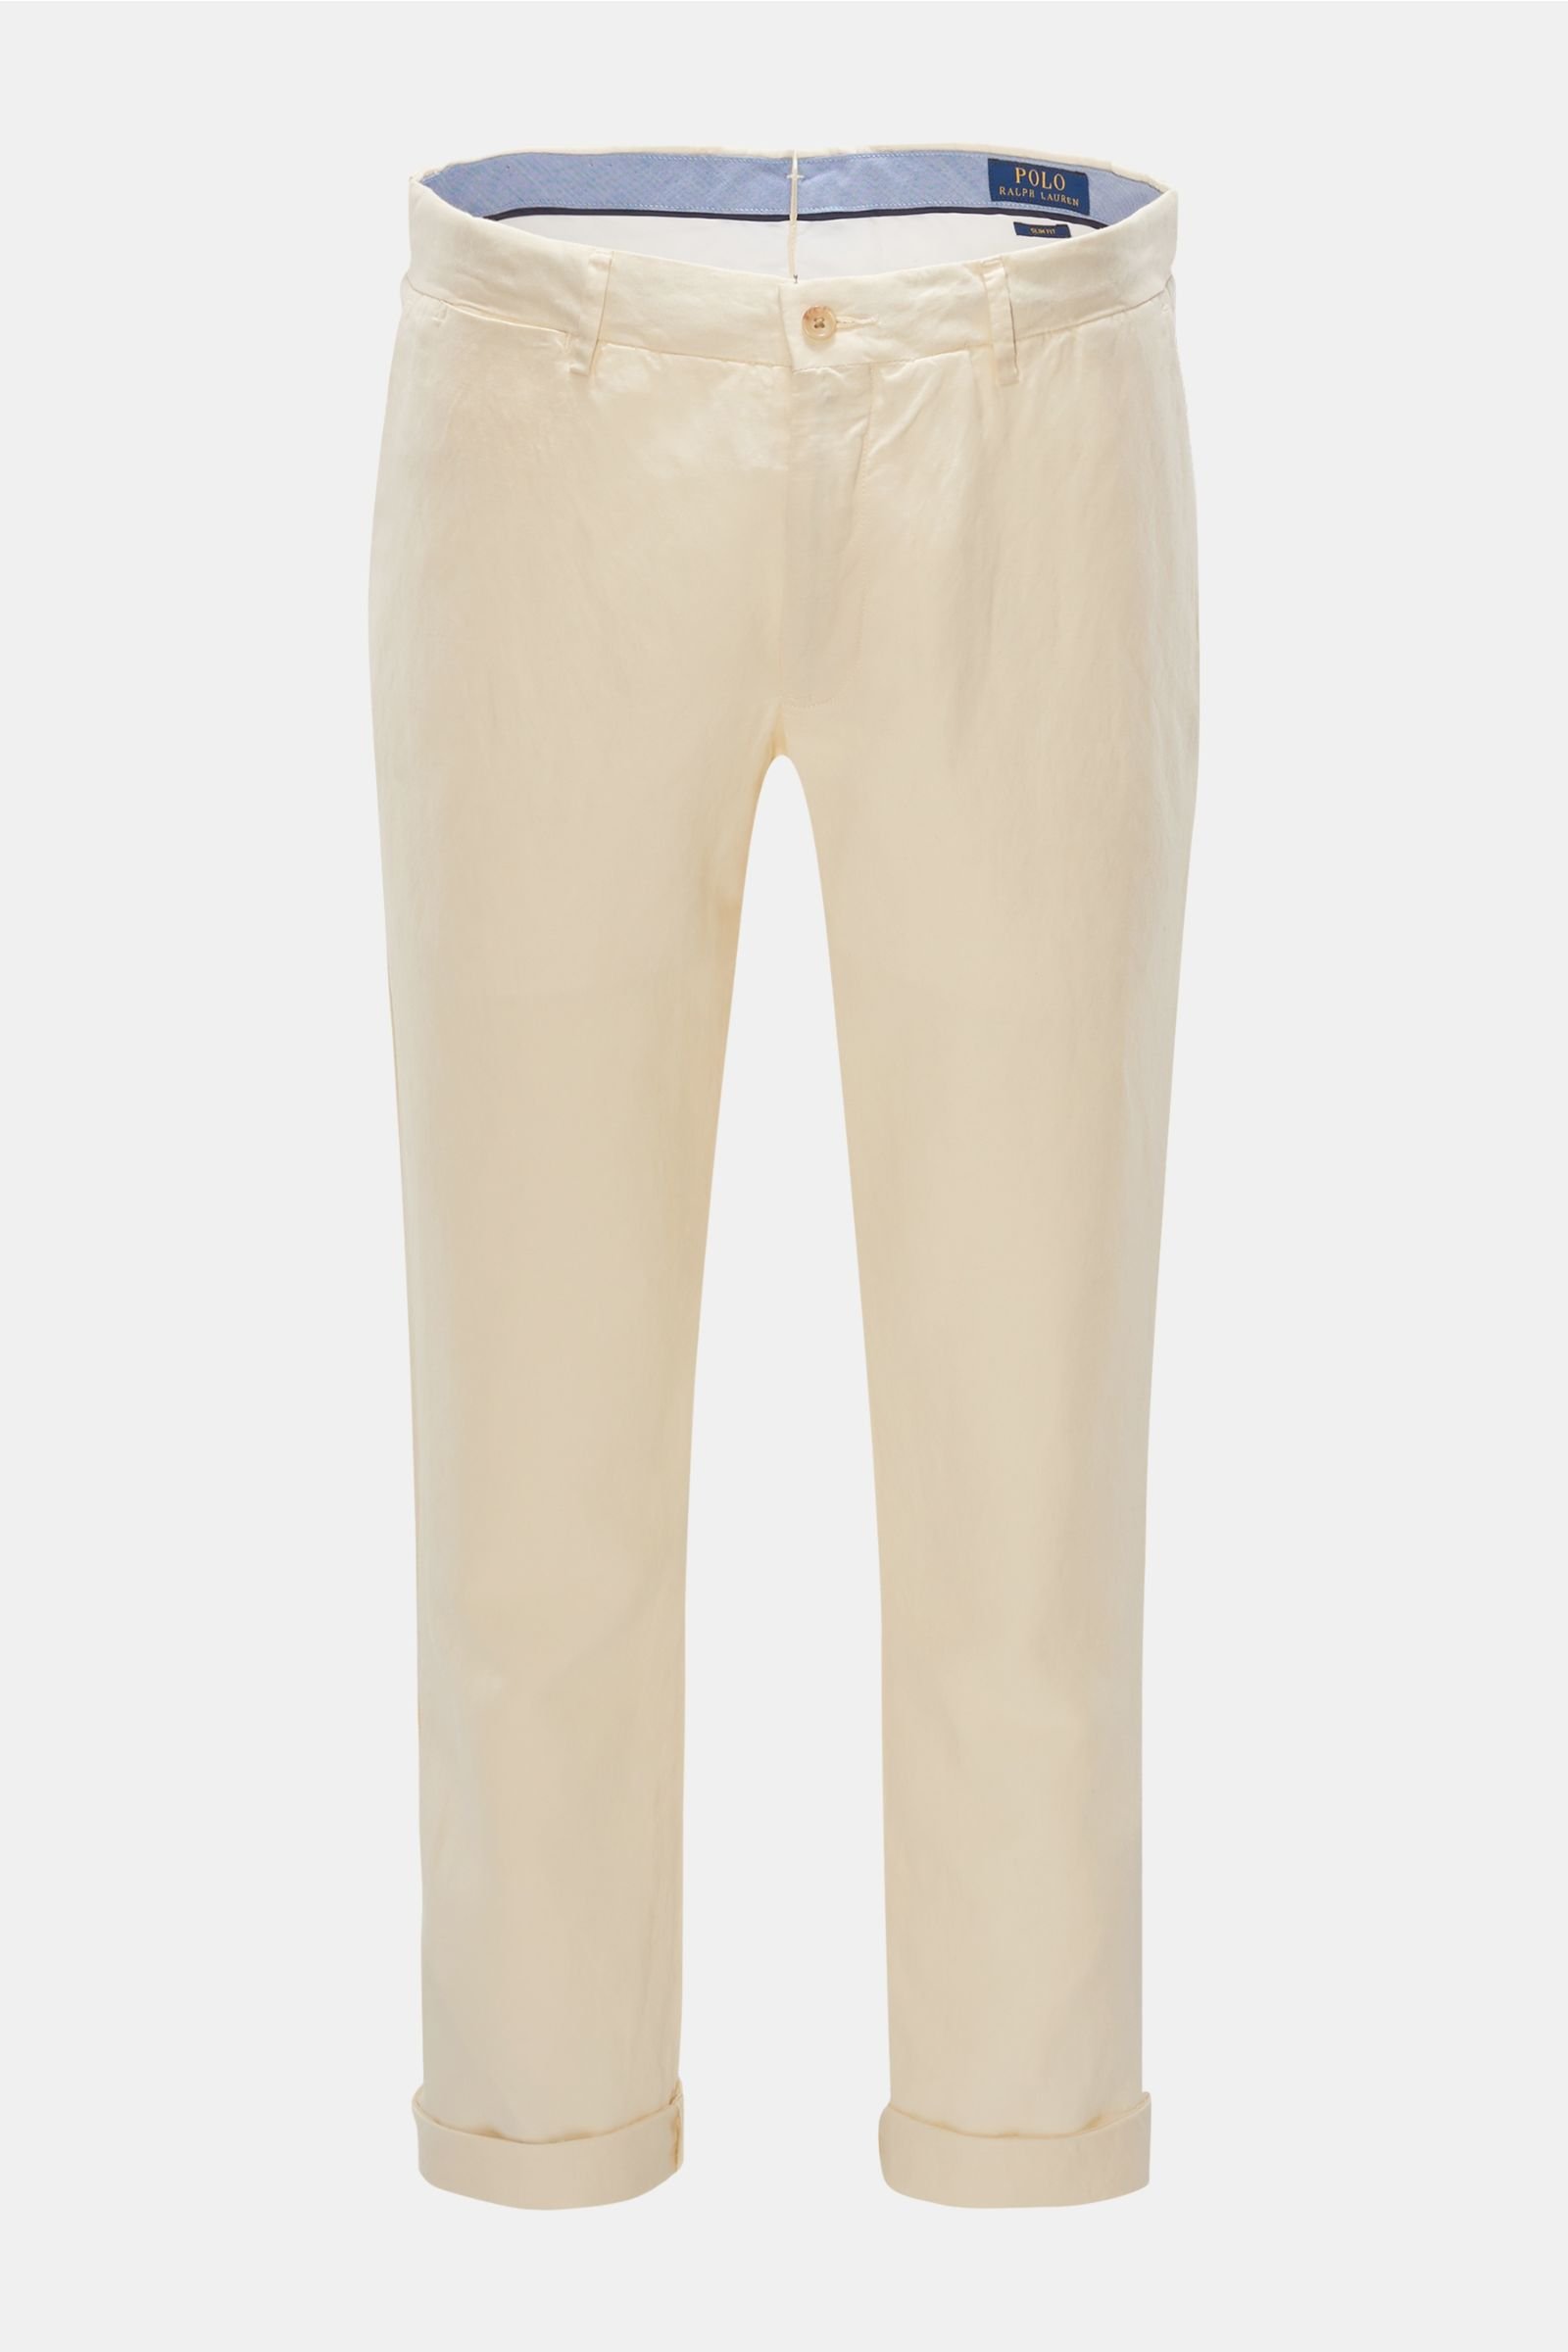 Polo Ralph Lauren Stretch Chino Pants Navy | Men | Volt